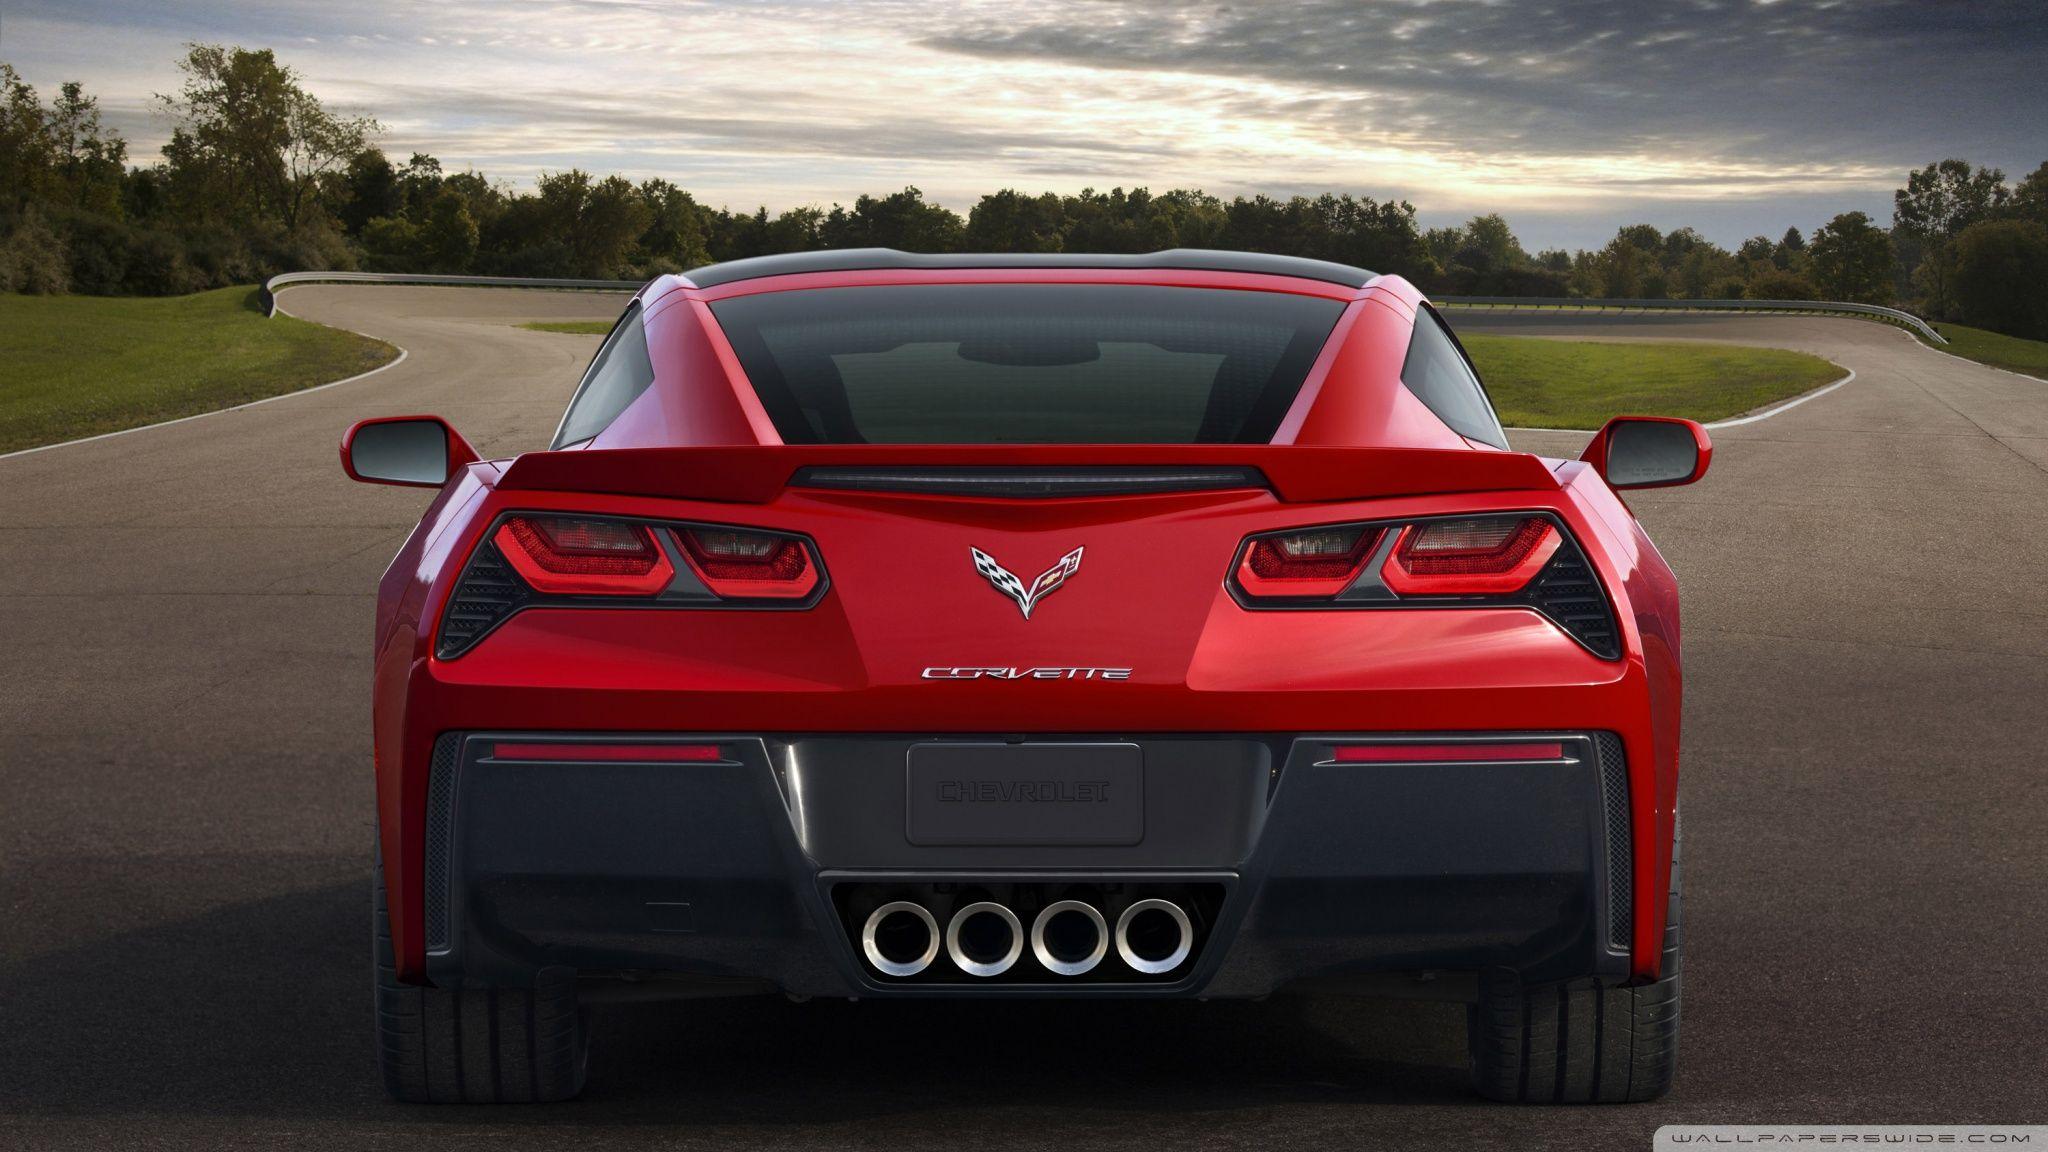 Corvette Car Wallpapers Hd For Mobile